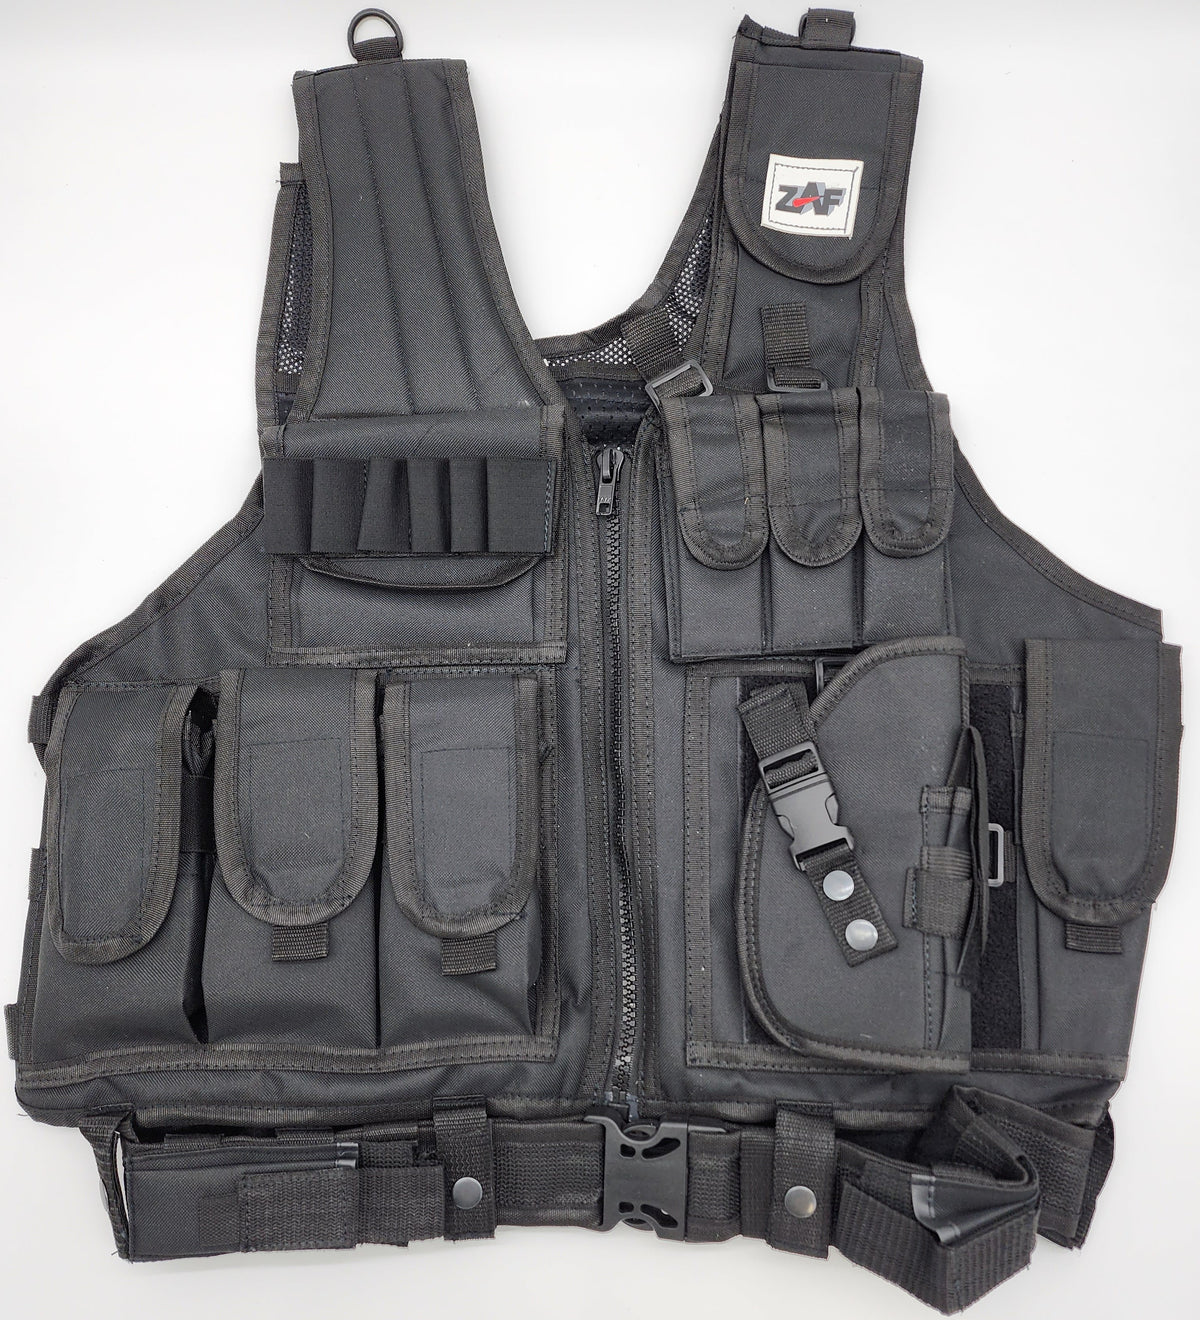 Tactical Airsoft Vest | w/ Pistol Holster | Fully Adjustable | Color: Black